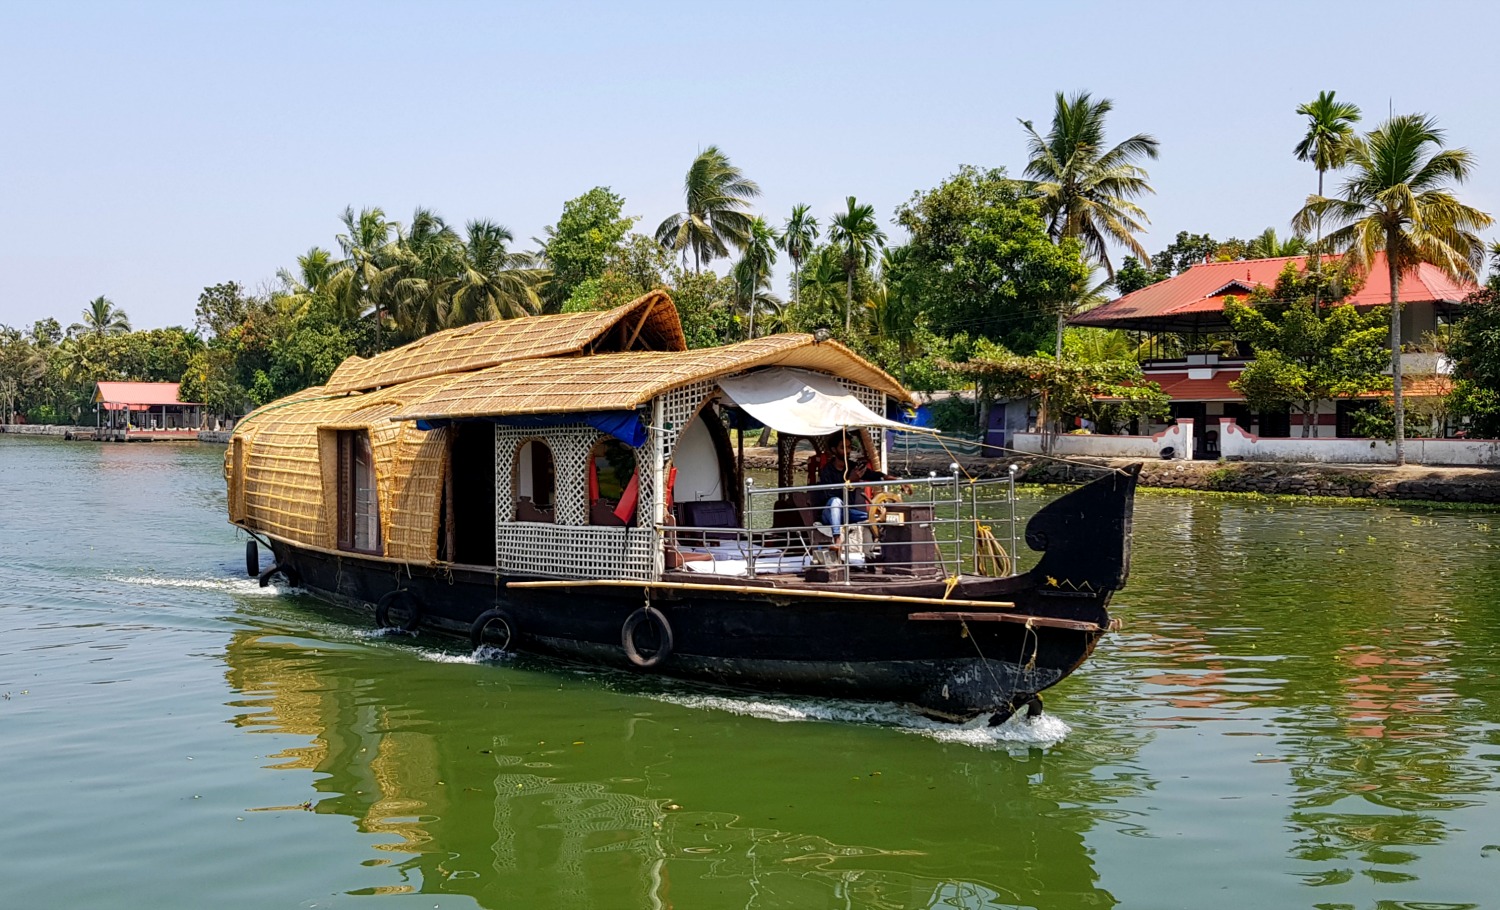 Aegiscabs 1374407238kerala-india-houseboat-backwaters-houses.jpg